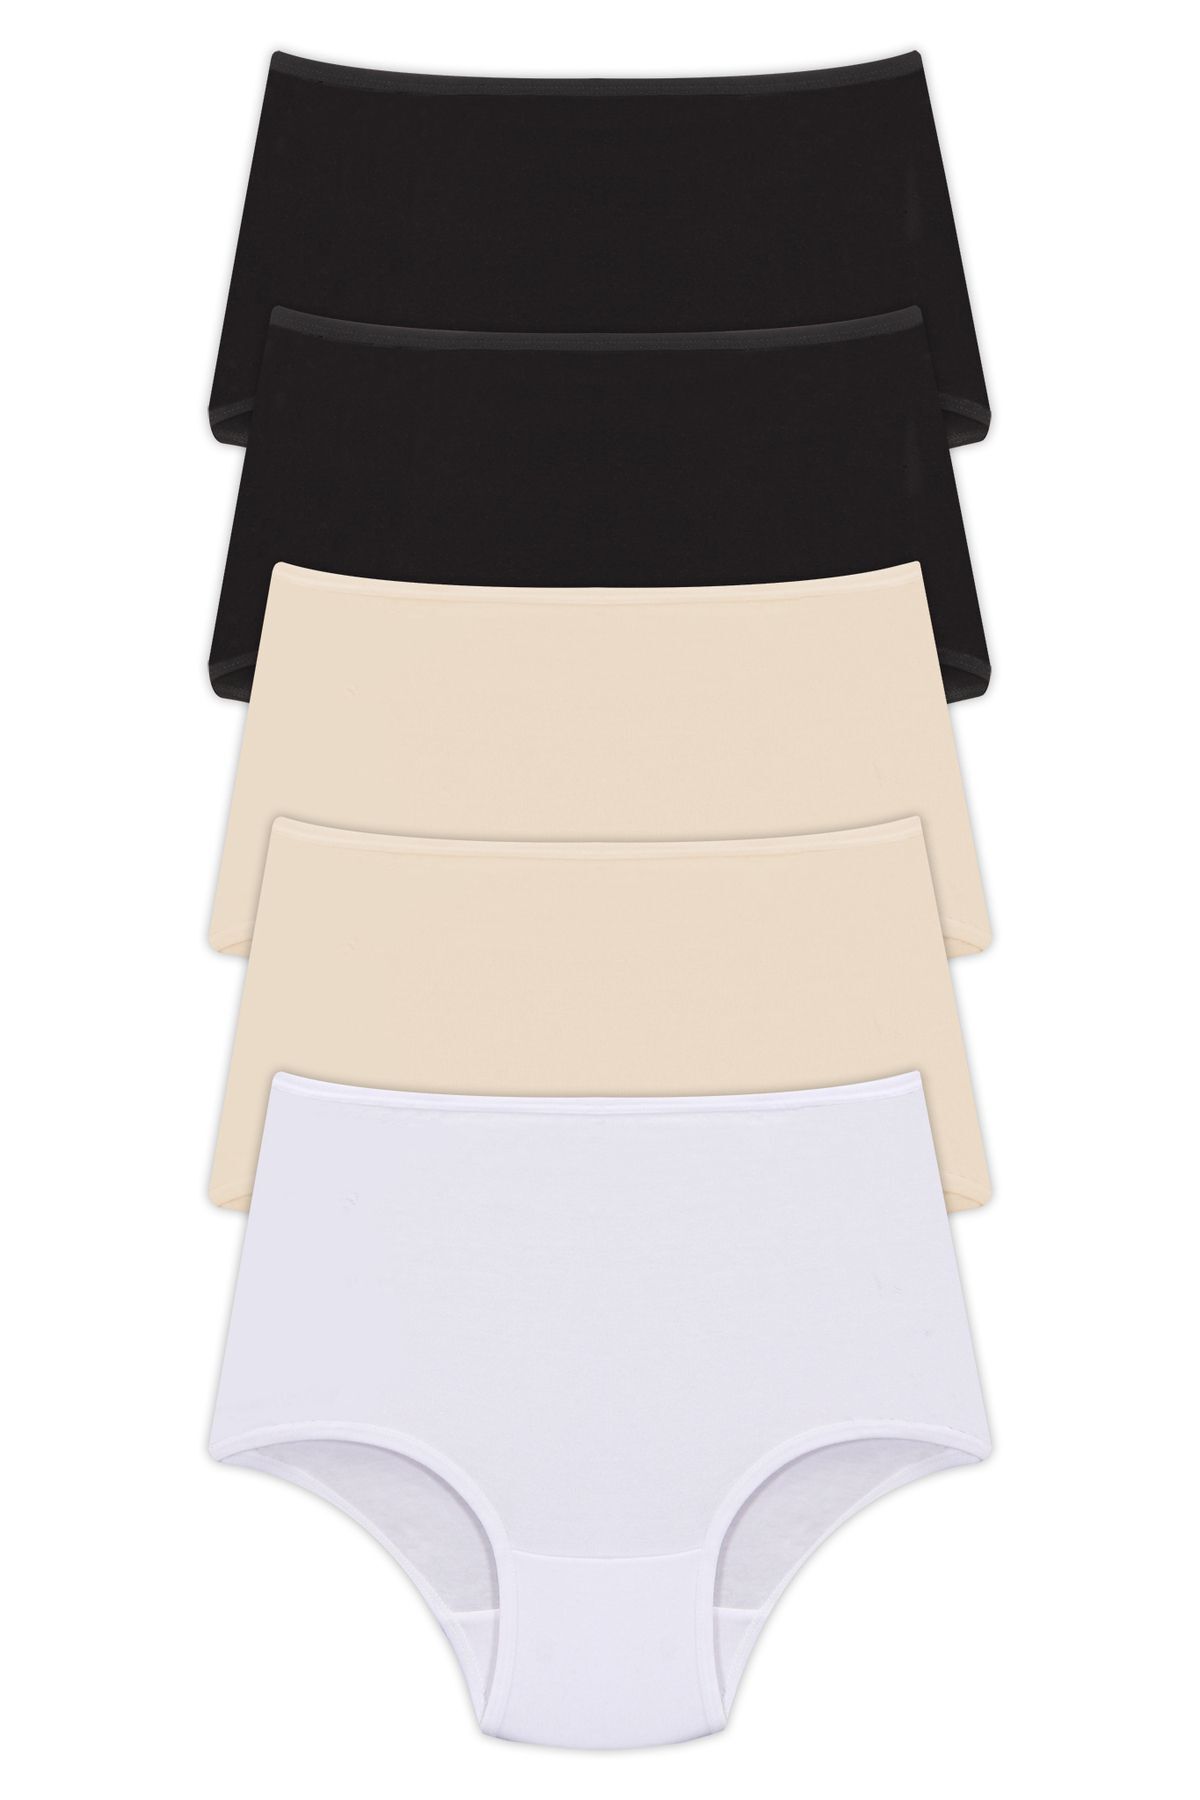 Soft Light Ekstra Yüksek Bel Kadın Külot Siyah Beyaz Ten Pamuklu 5'li Paket